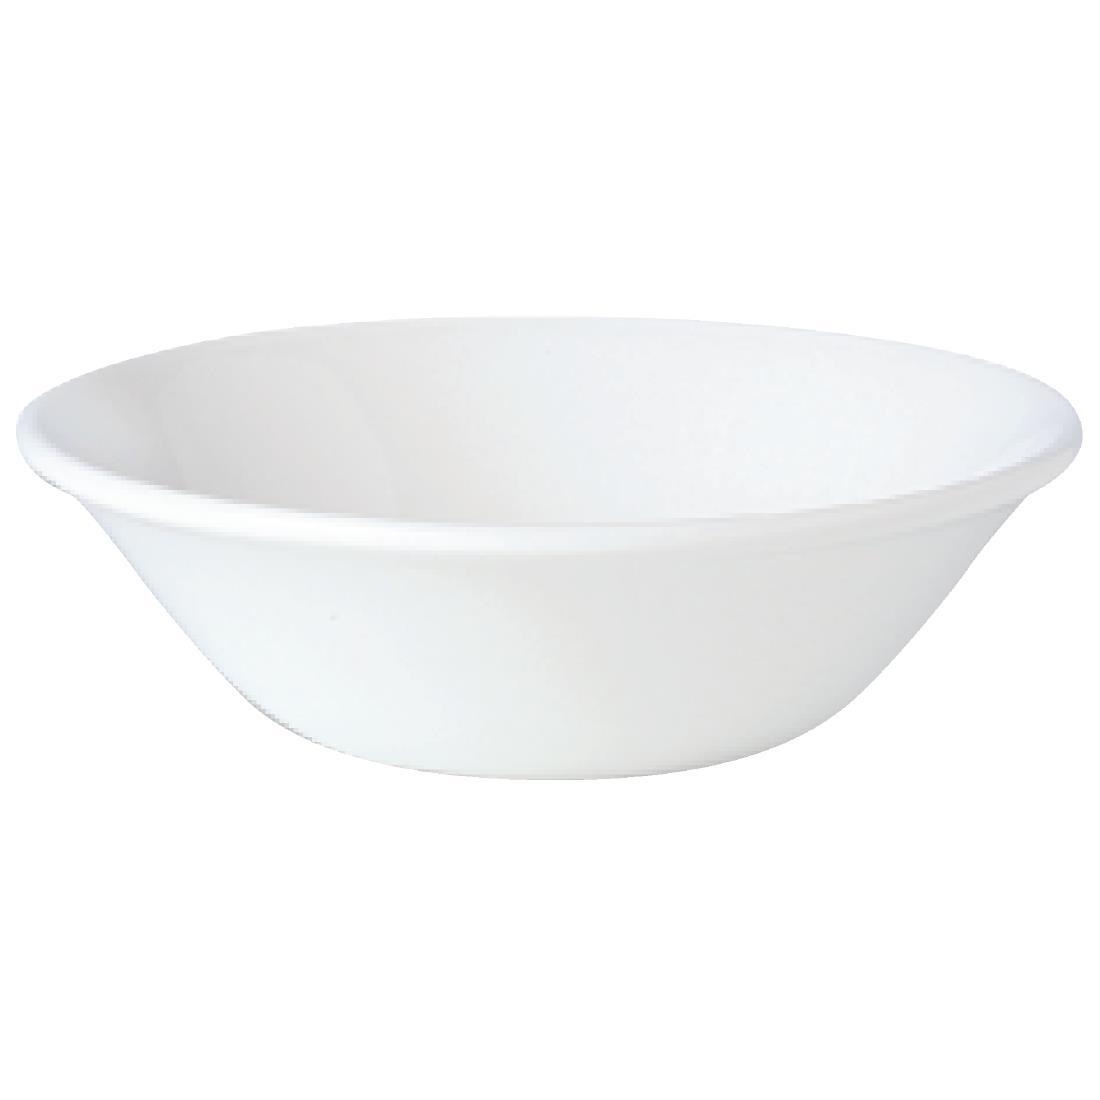 Steelite Simplicity White Oatmeal Bowls 165mm (Pack of 36) - V0023  - 1